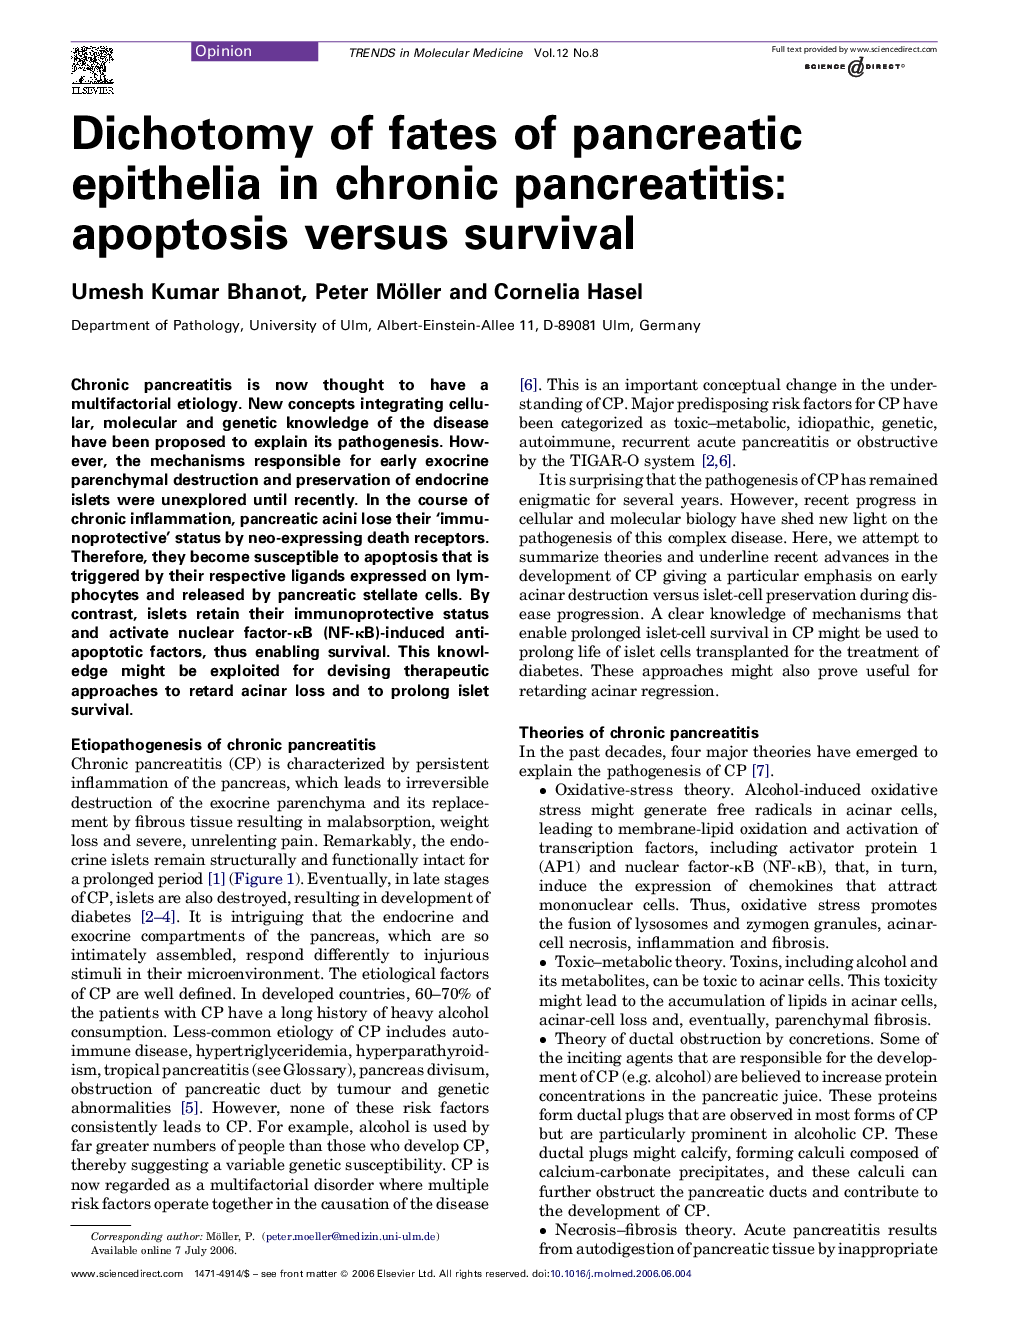 Dichotomy of fates of pancreatic epithelia in chronic pancreatitis: apoptosis versus survival